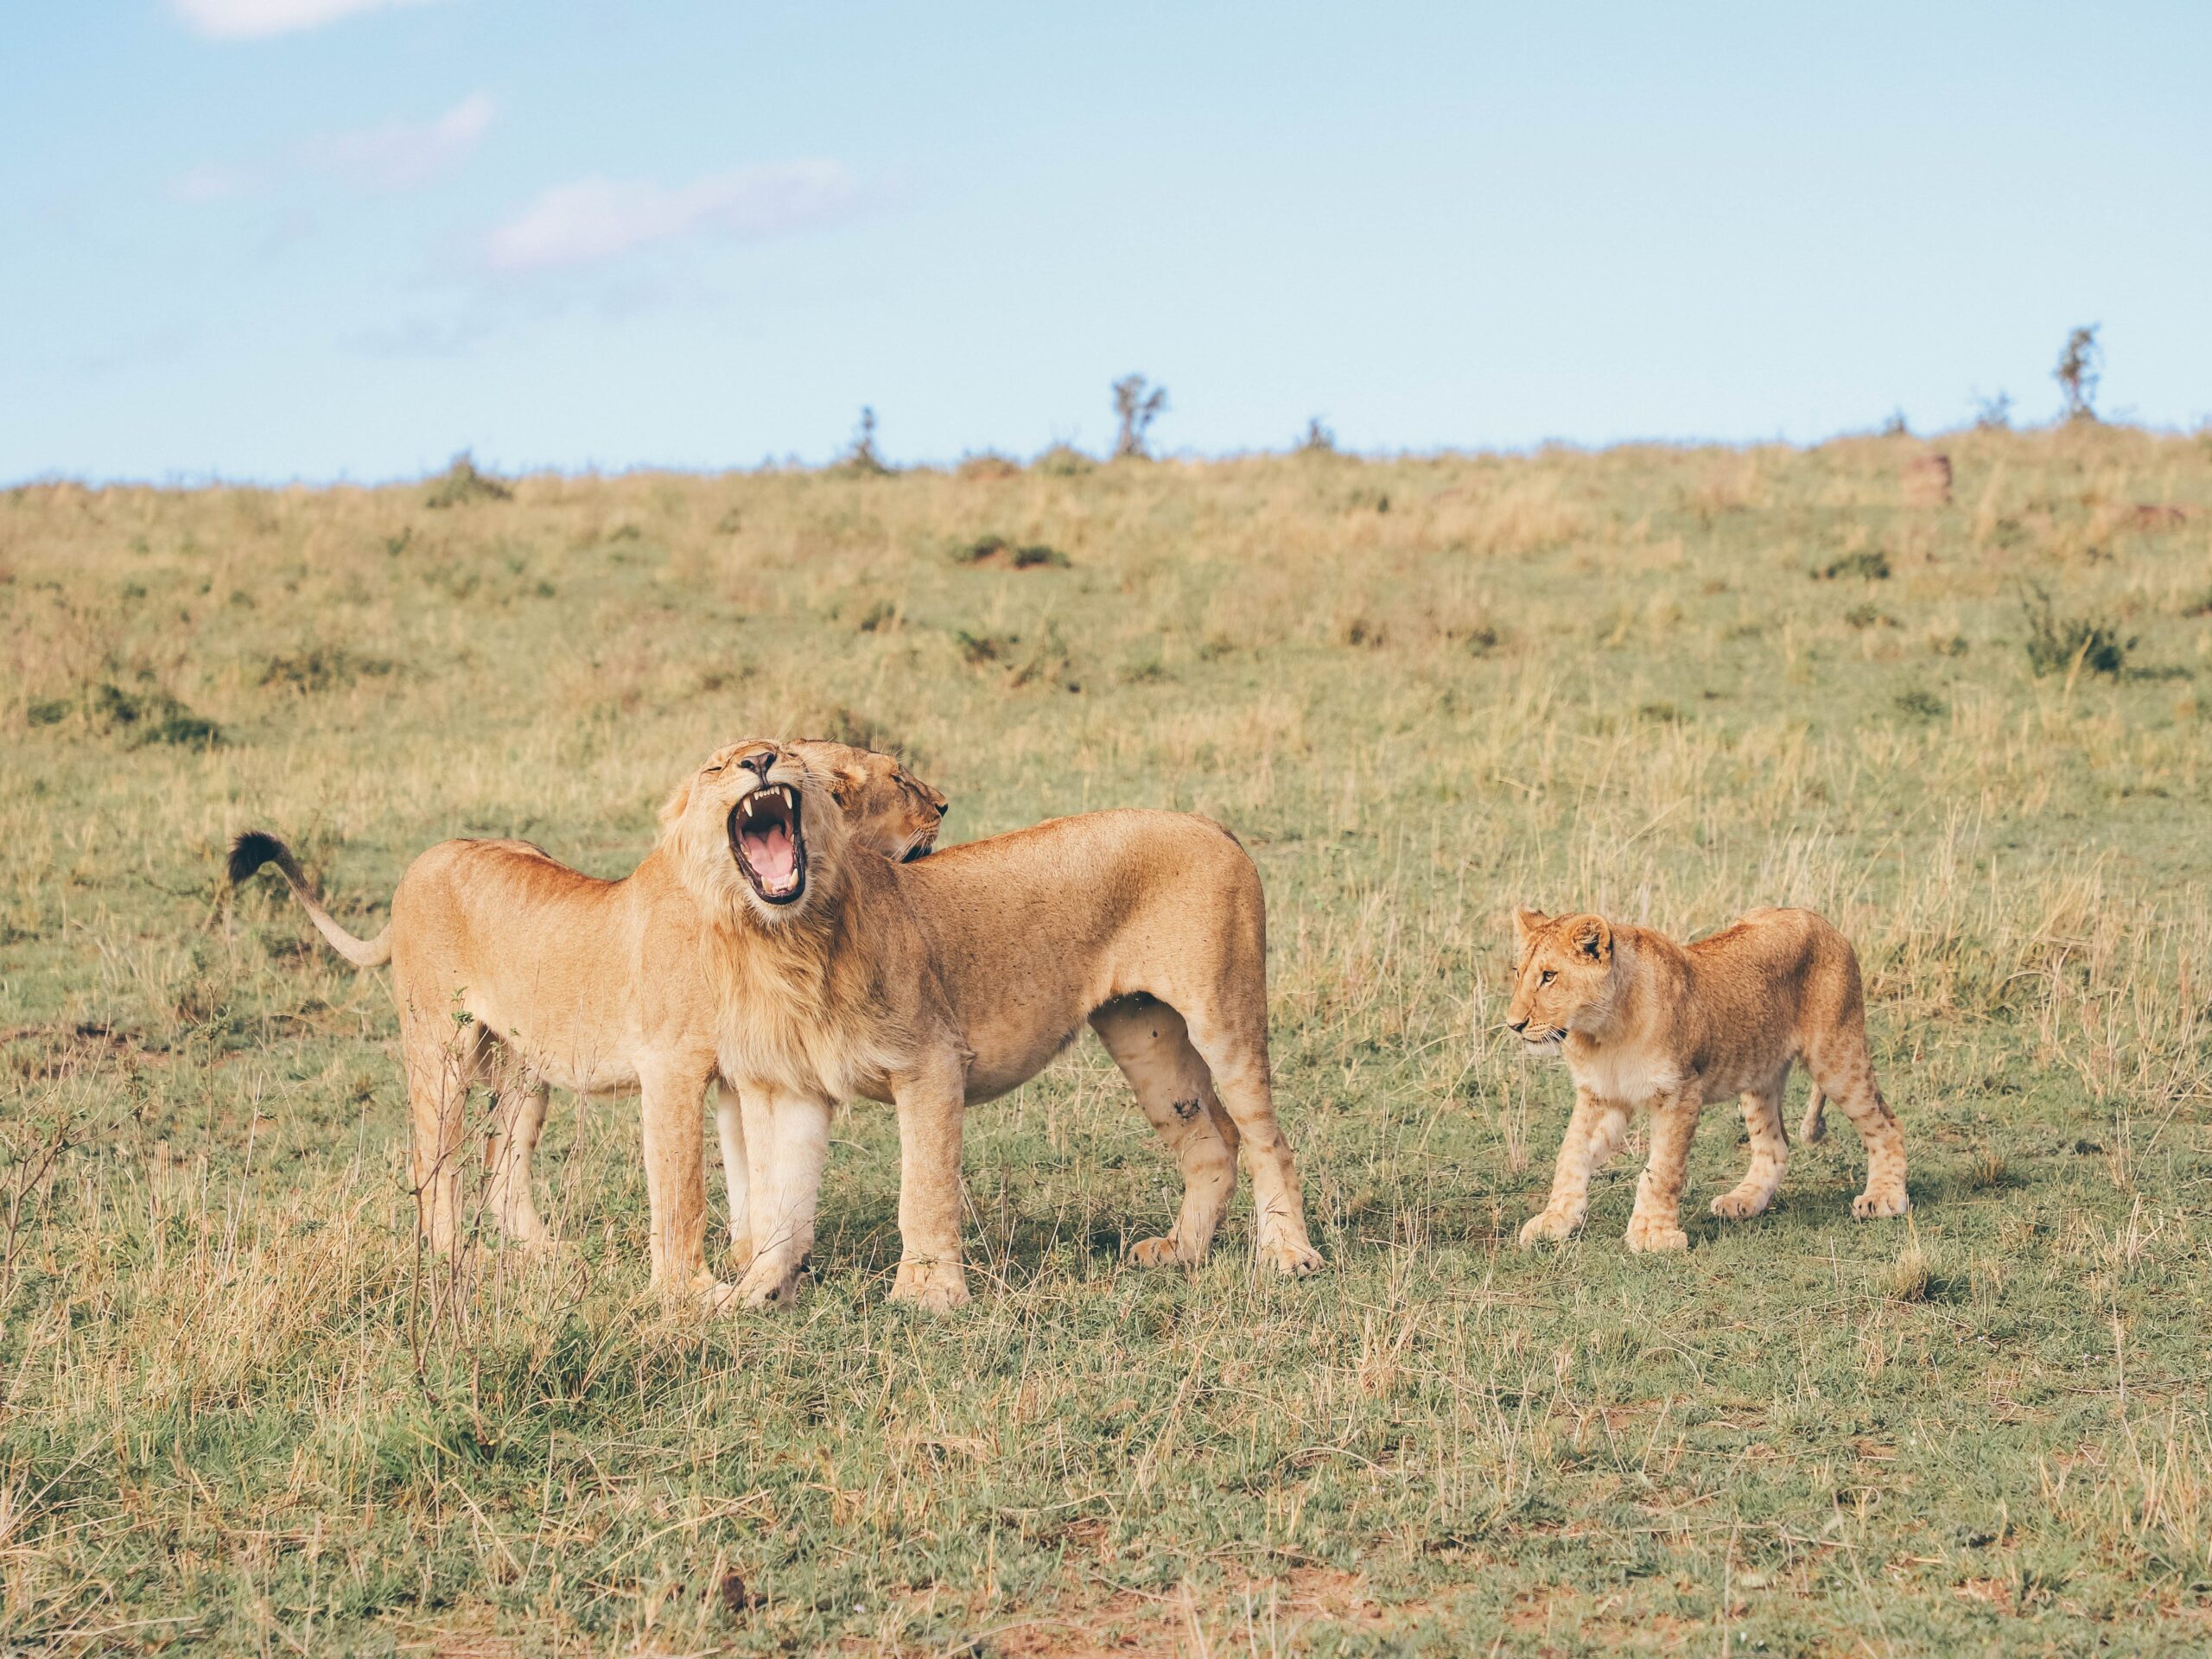 Lions roaring on Safari